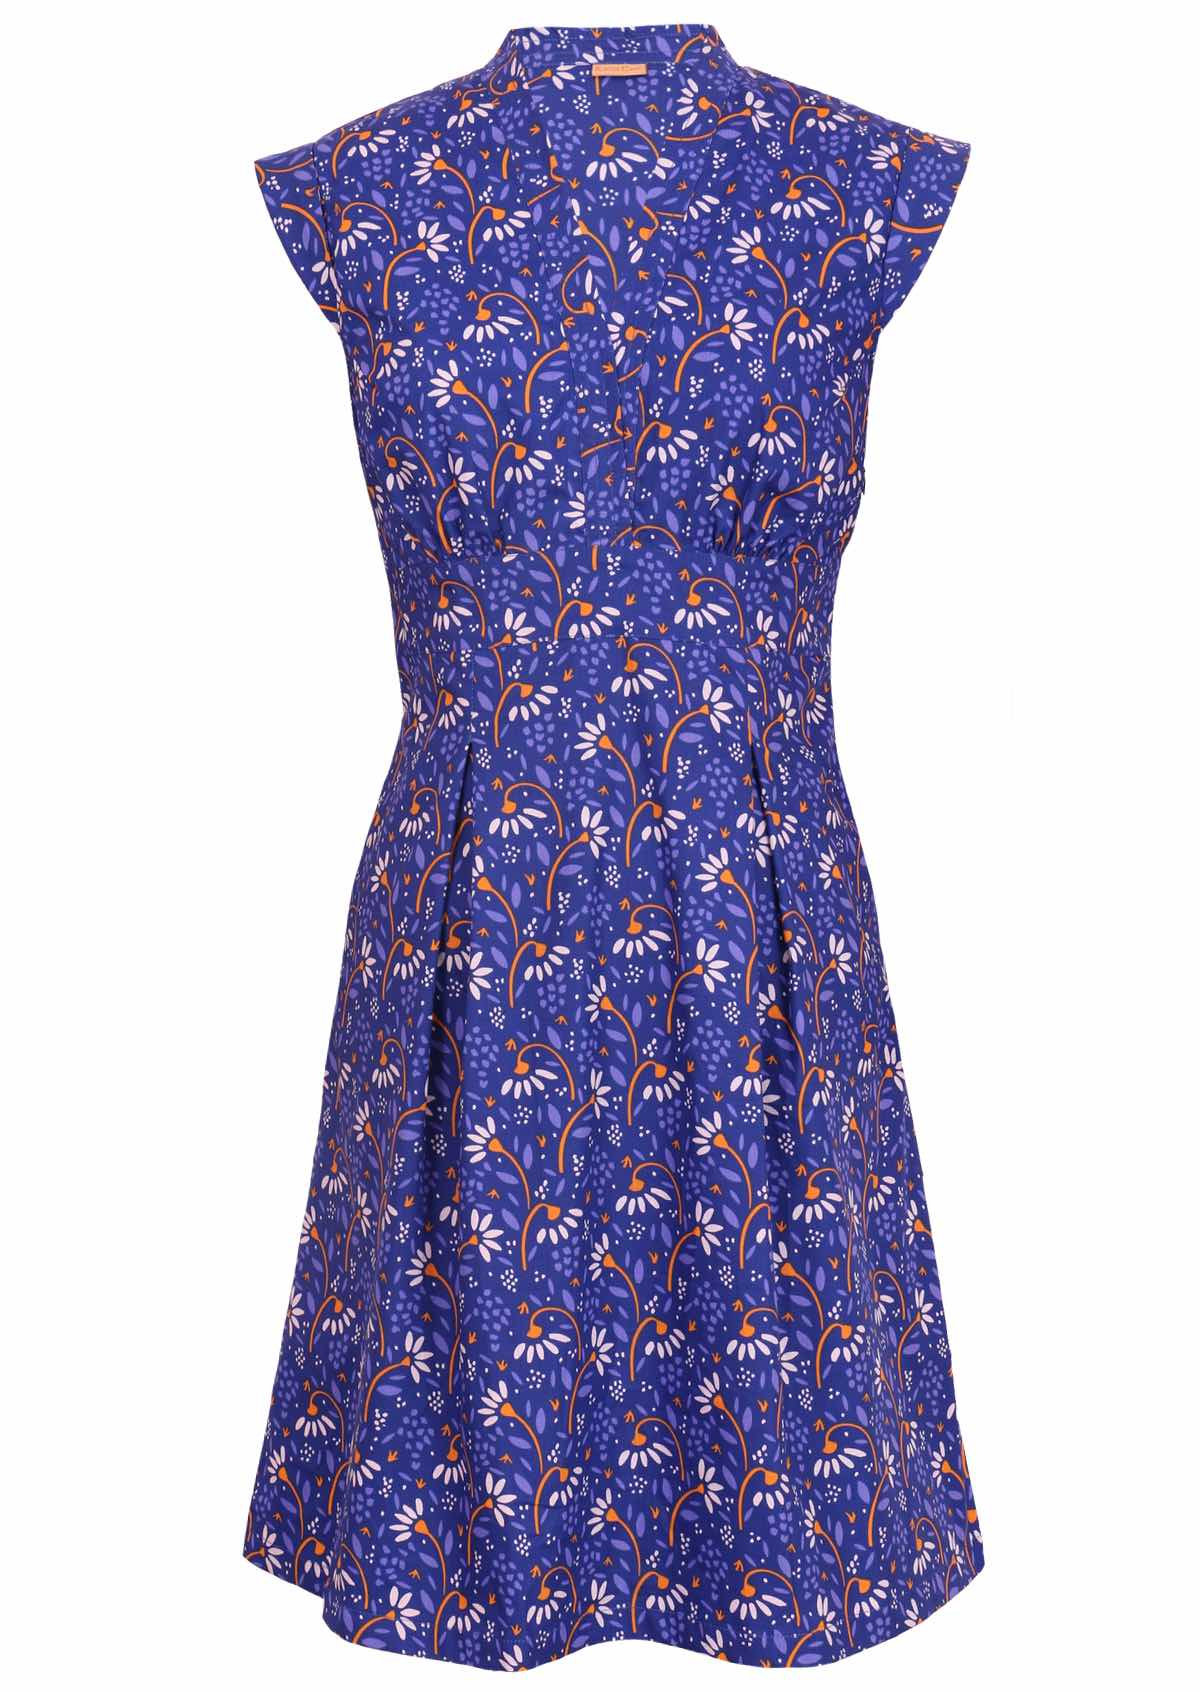 Retro cotton dress with V-neckline with top stitch detail